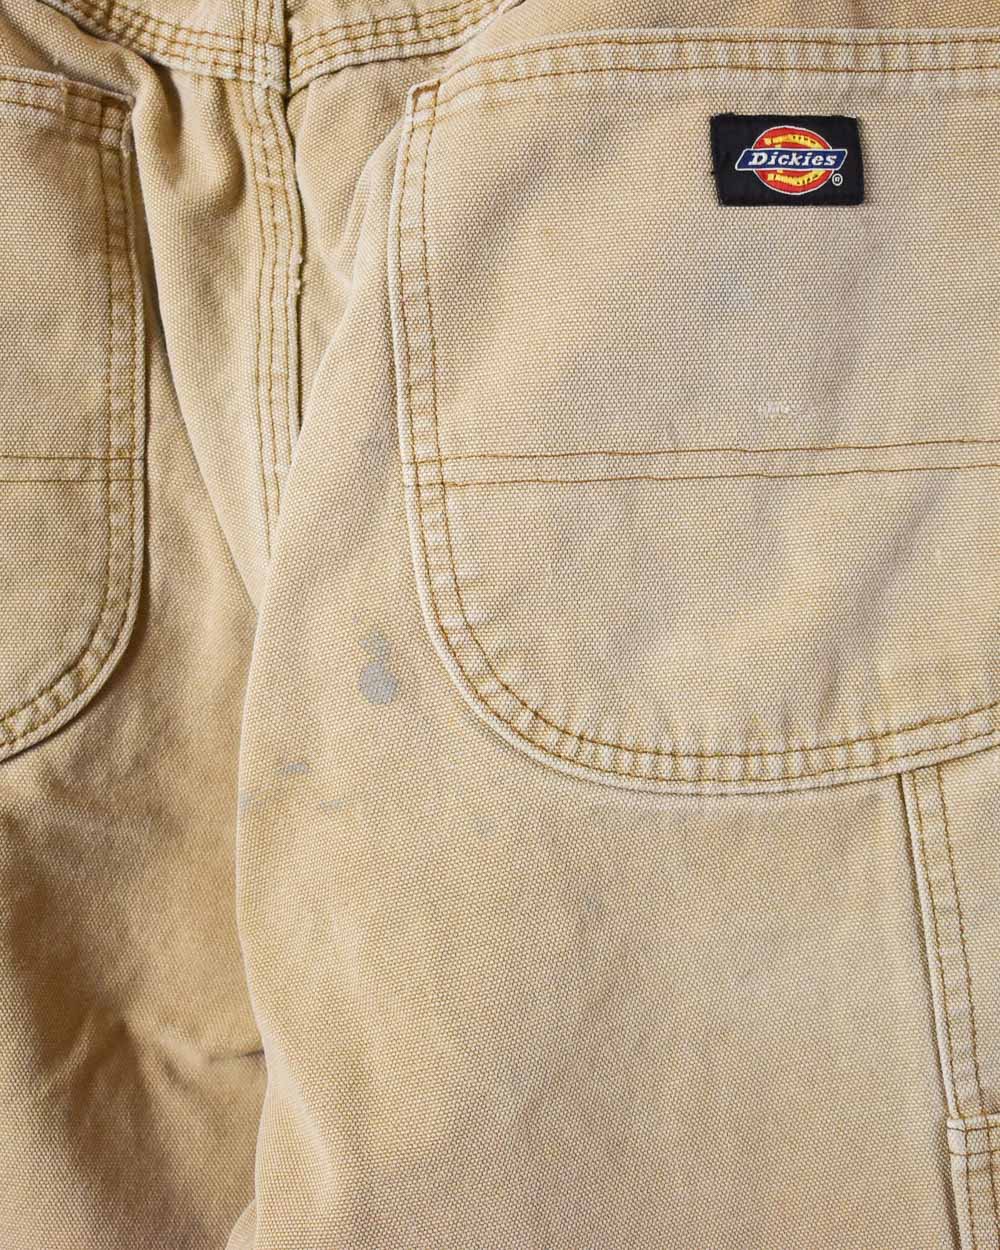 Neutral Dickies Distressed Carpenter Jeans - W34 L29